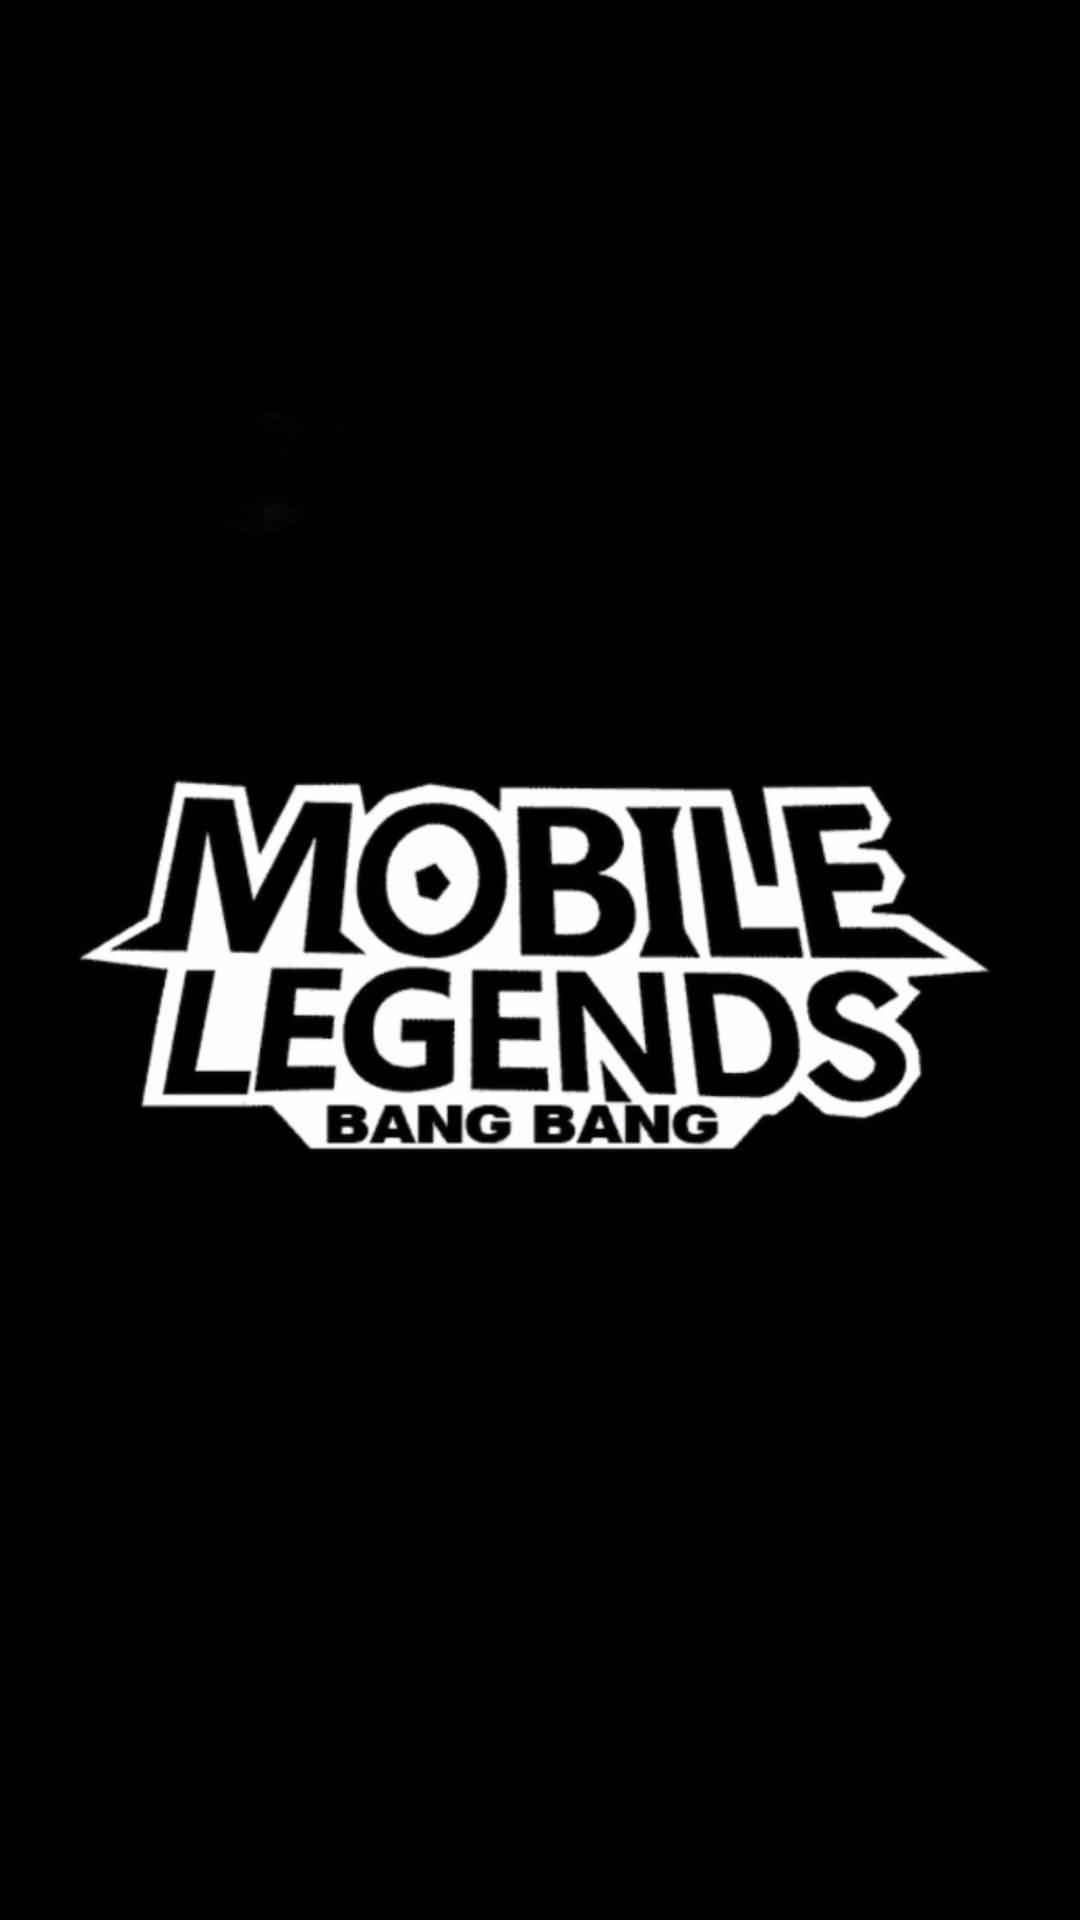 Förenklatmobile Legends Bang Bang-logotyp. Wallpaper